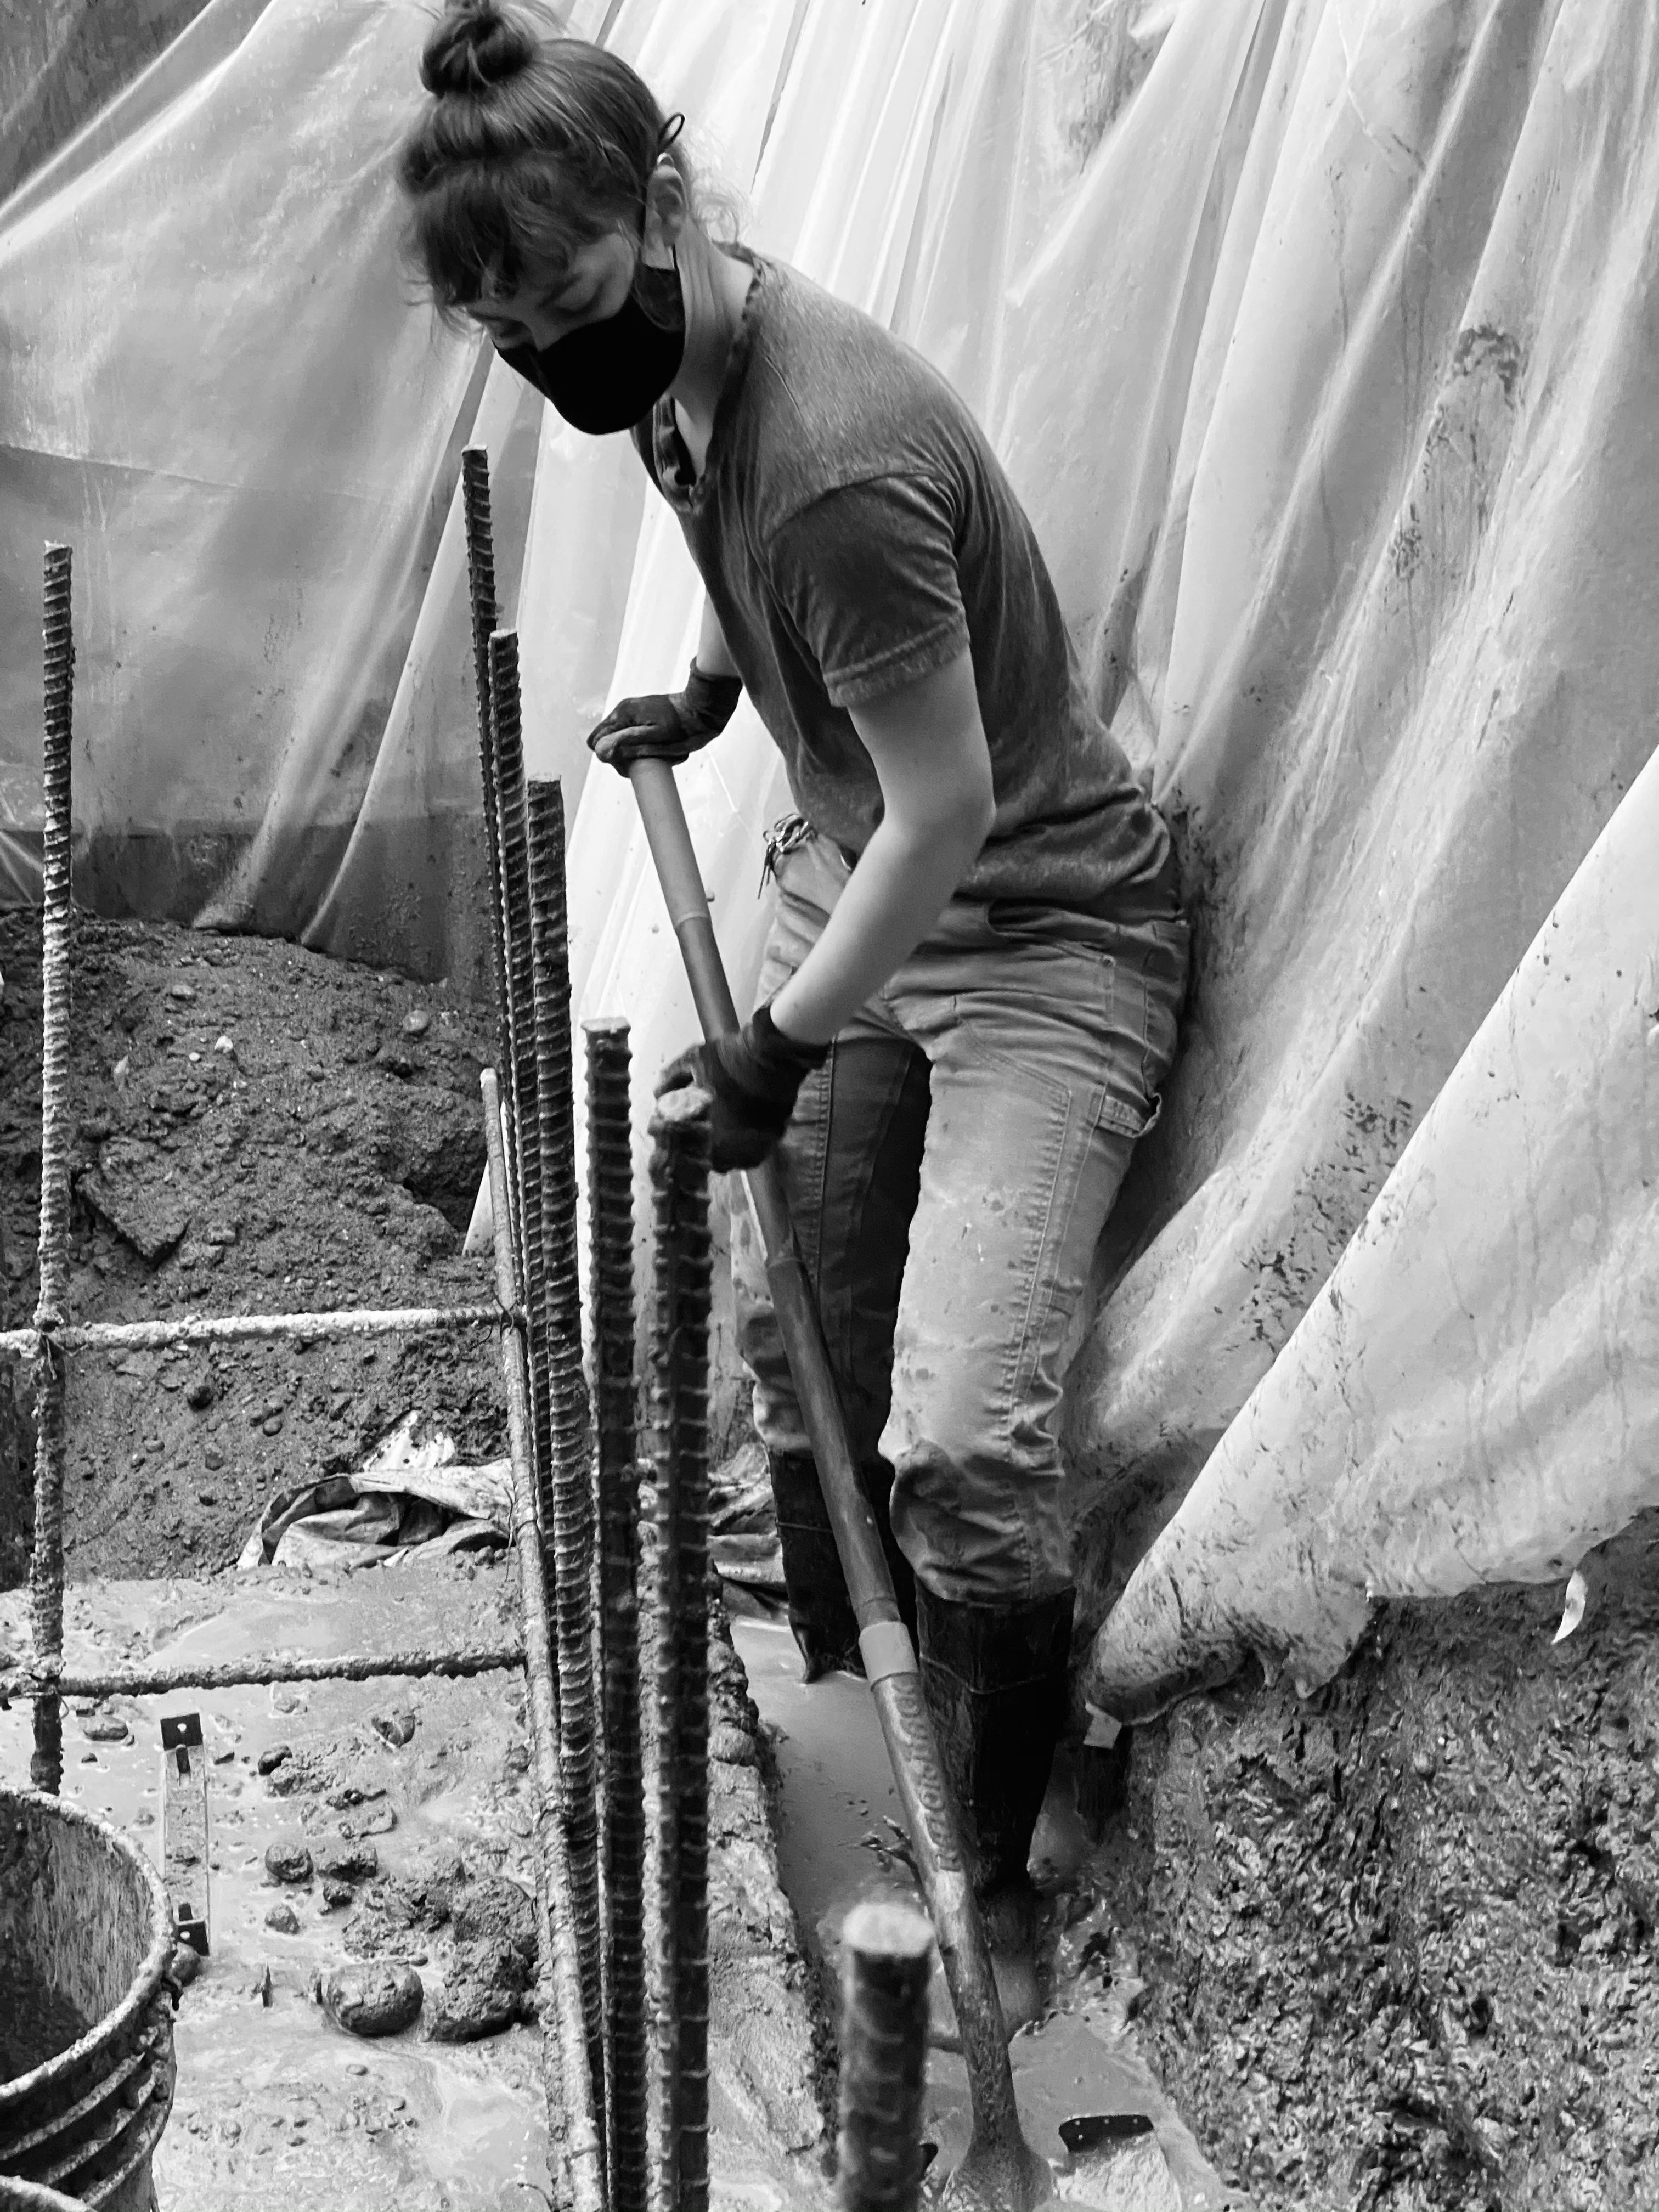 Metis Construction employee Jen working on a job